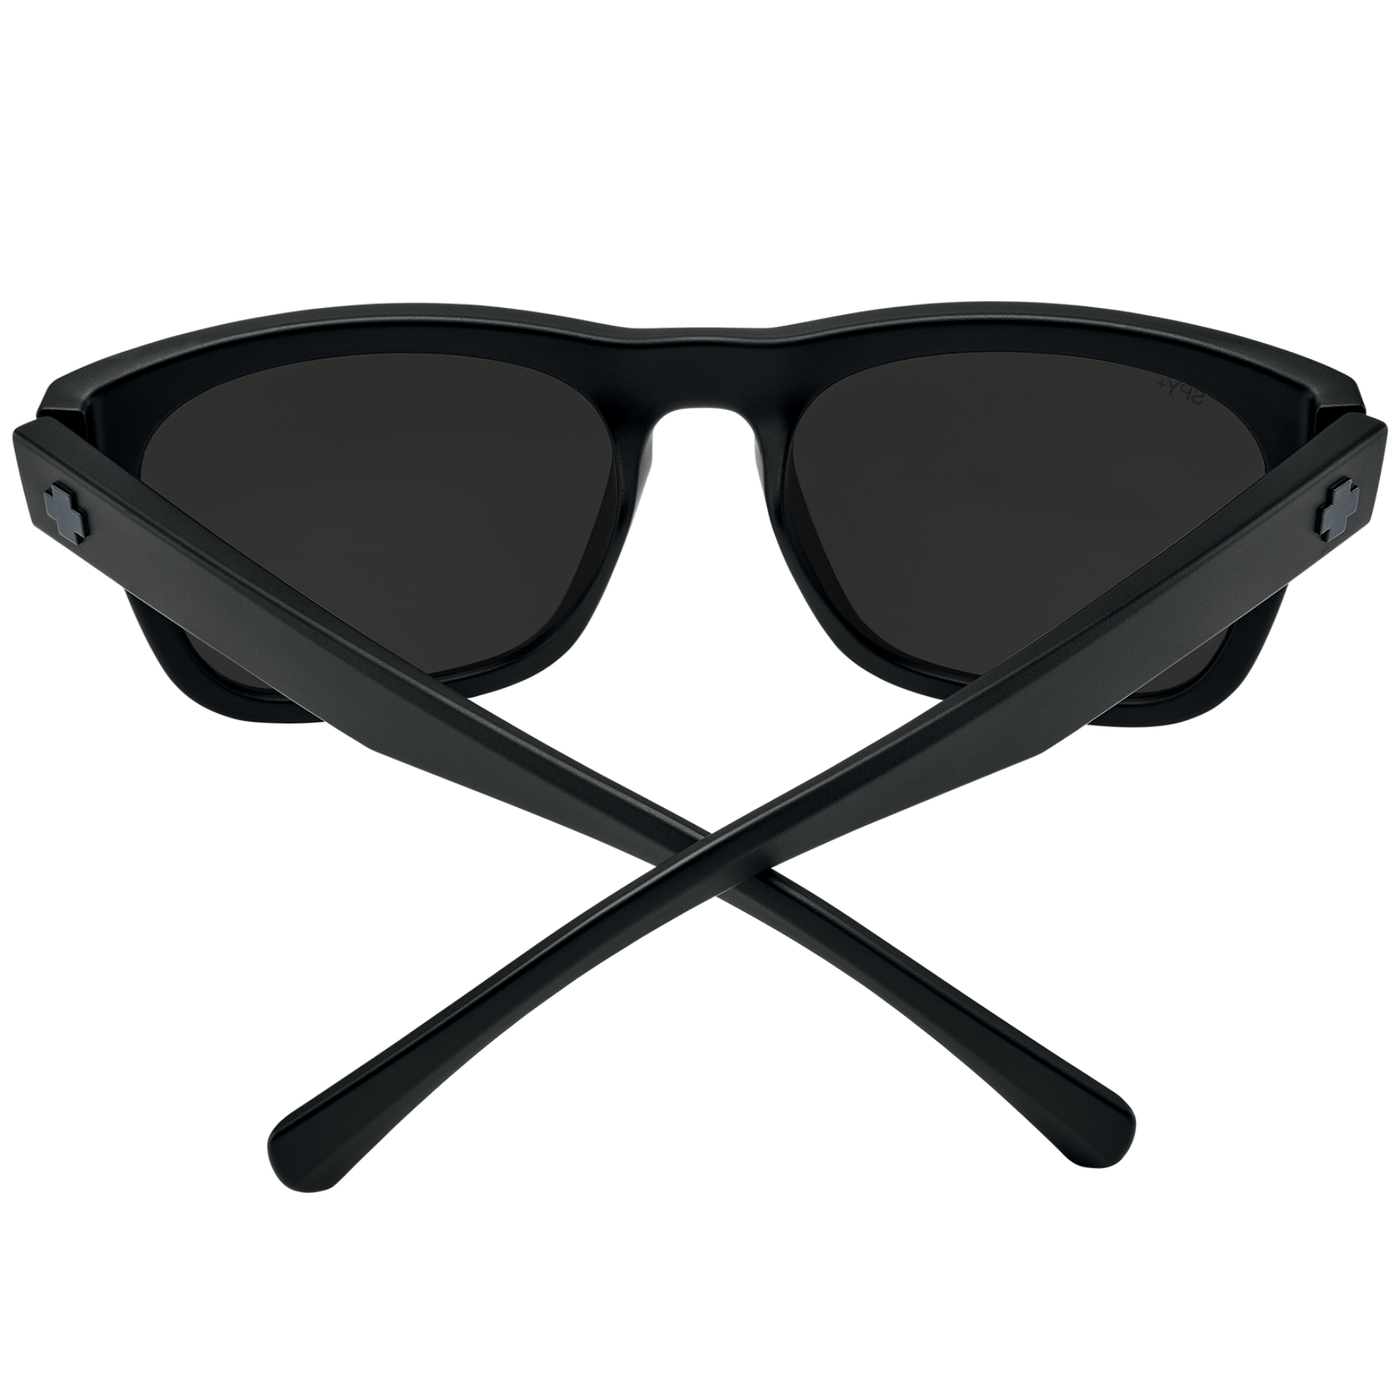 black, square shape sunglasses for women